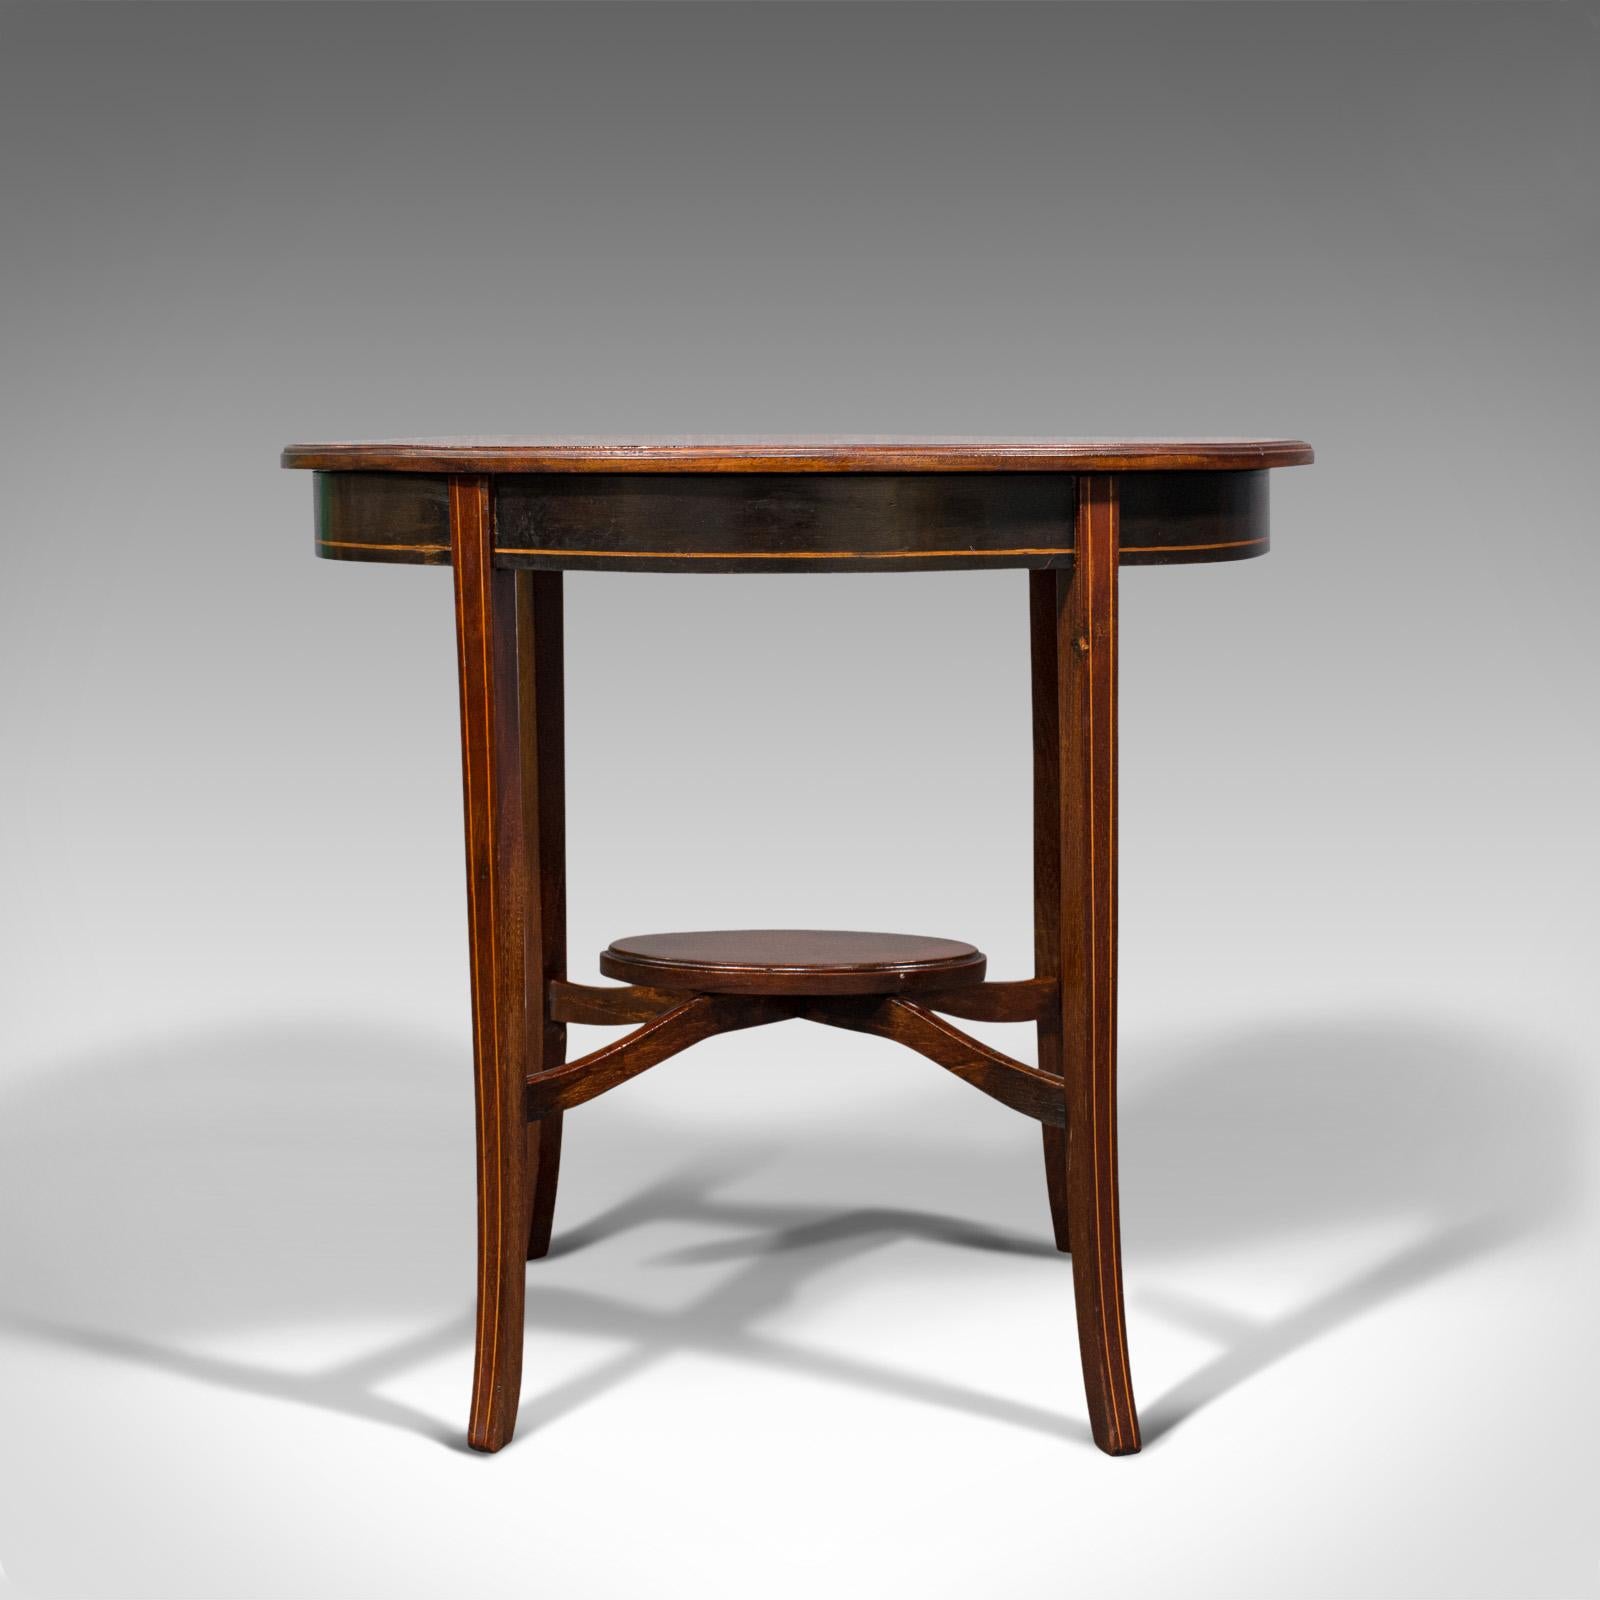 19th Century Antique Side Table, English, Mahogany, Walnut, Lamp, Occasional, Regency, C.1820